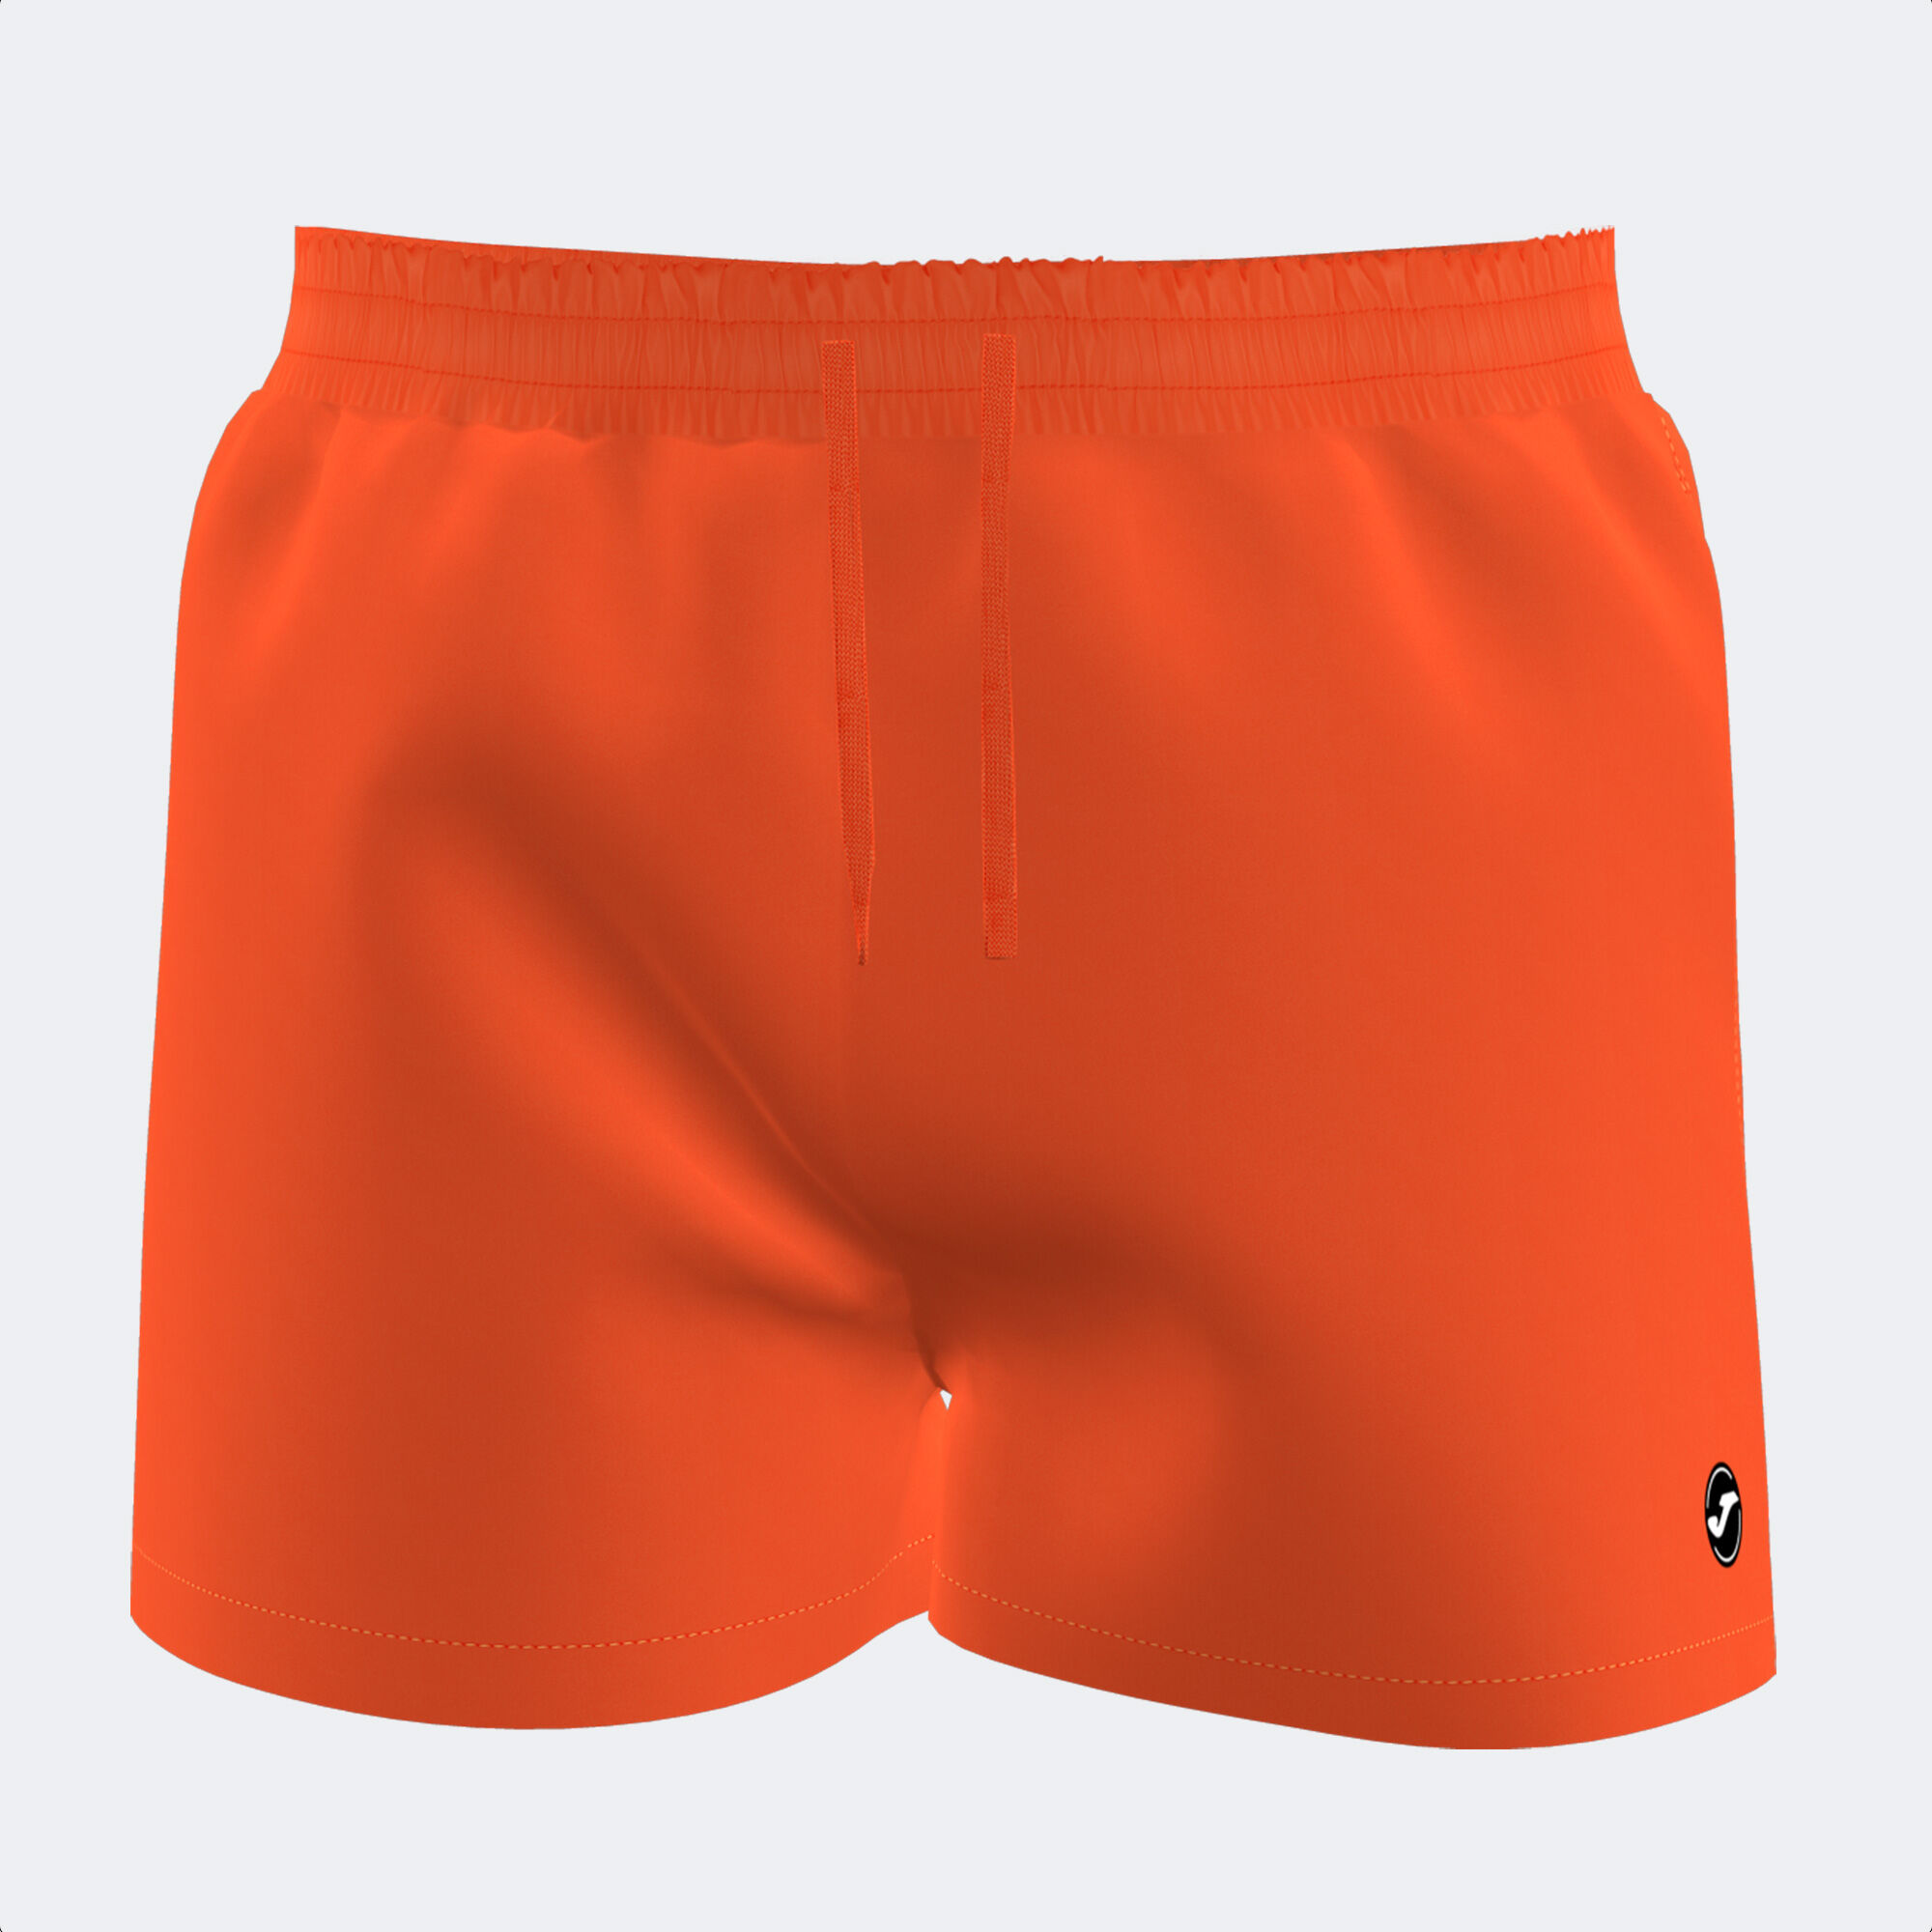 Swimming trunks man Arnao orange